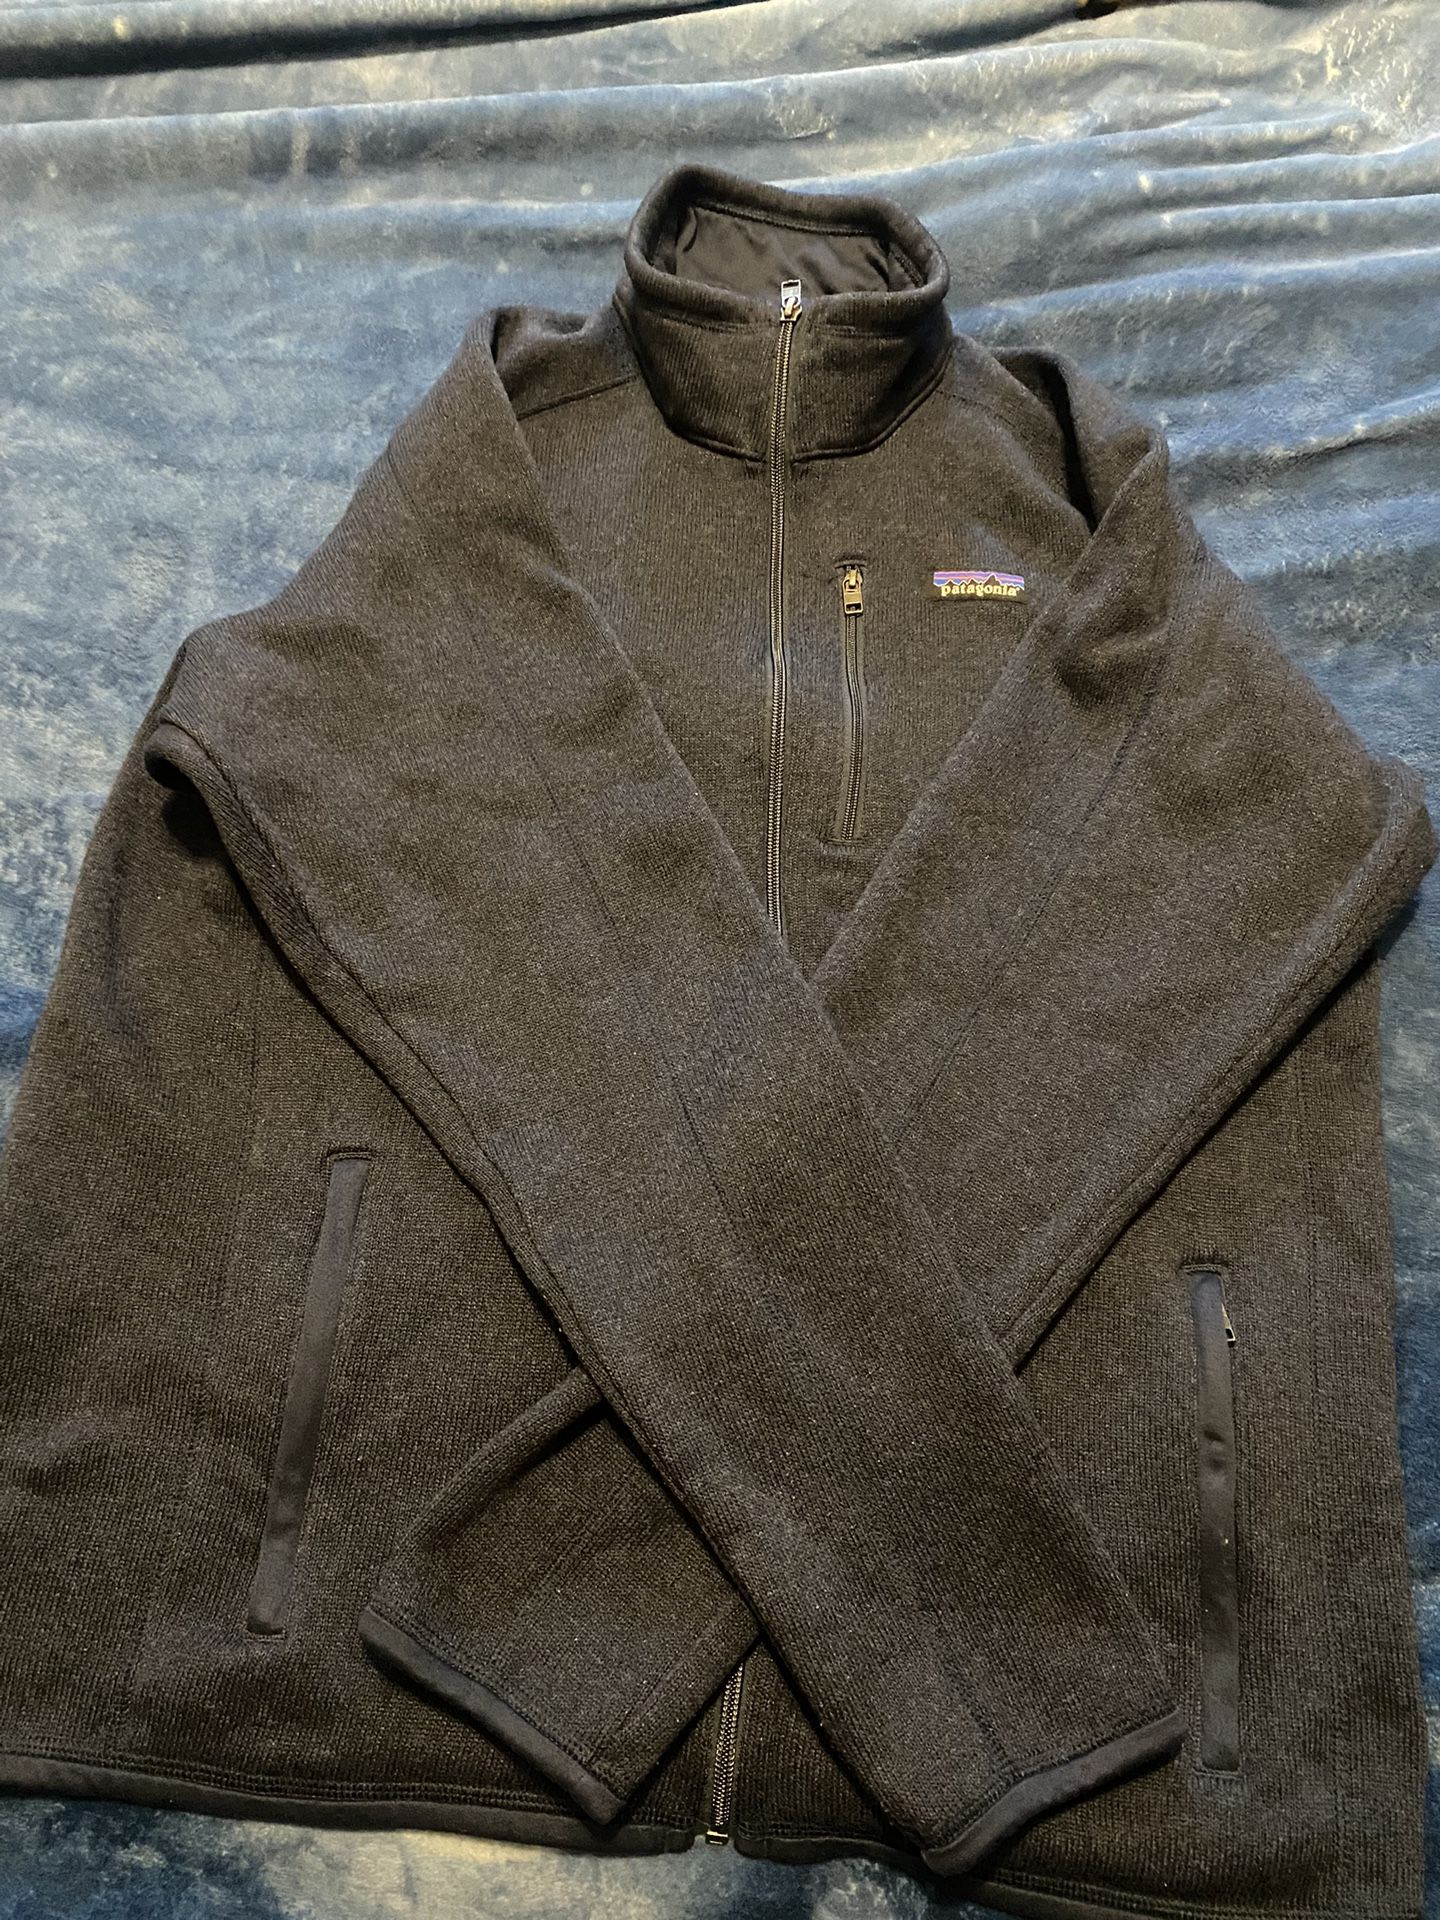 Patagonia Men’s Better Sweater Fleece Jacket Size L